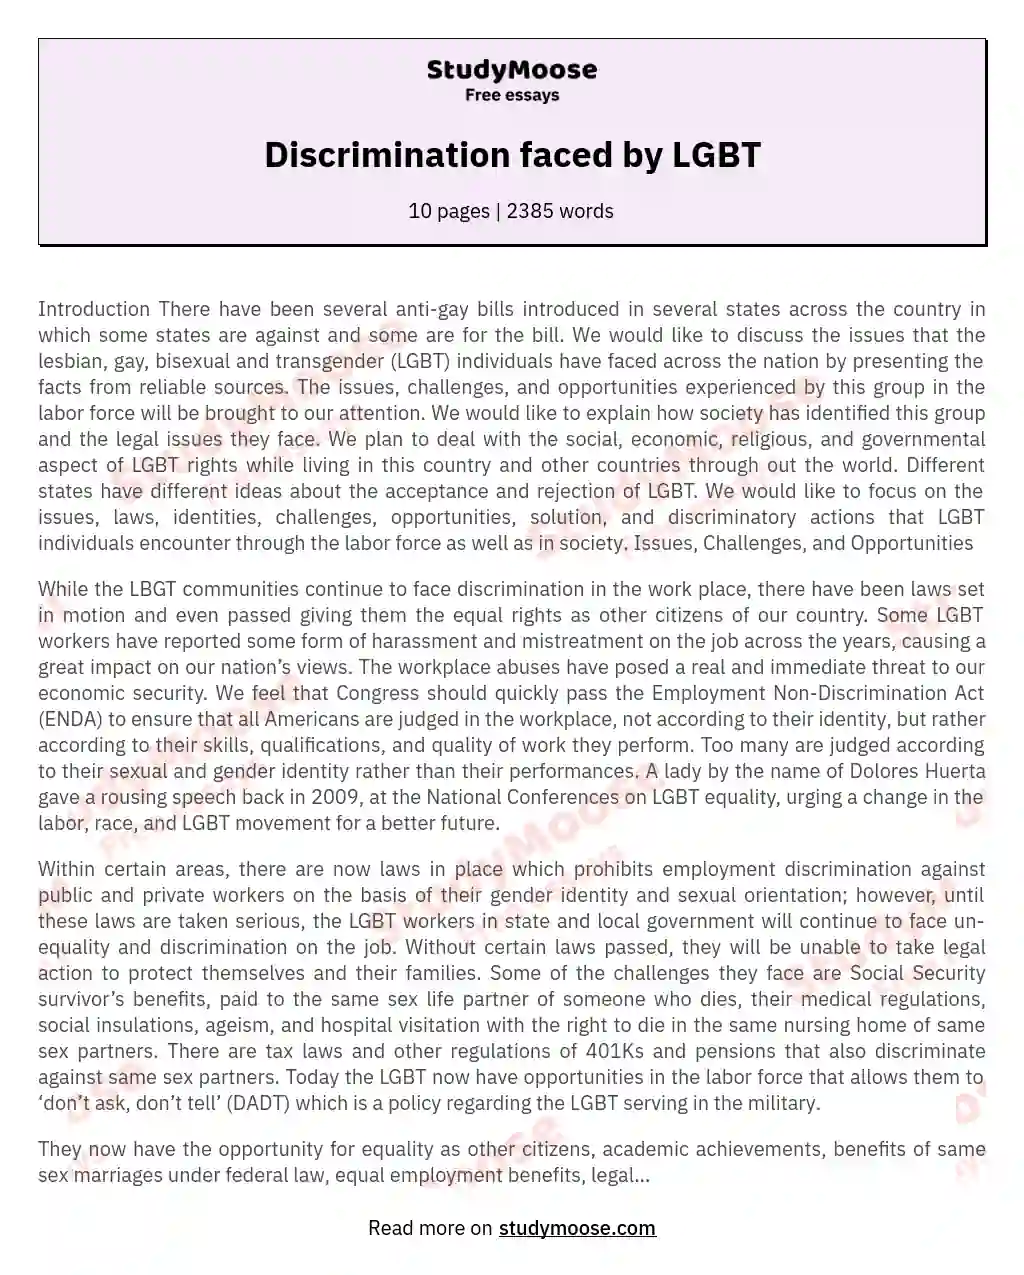 Discrimination faced by LGBT essay